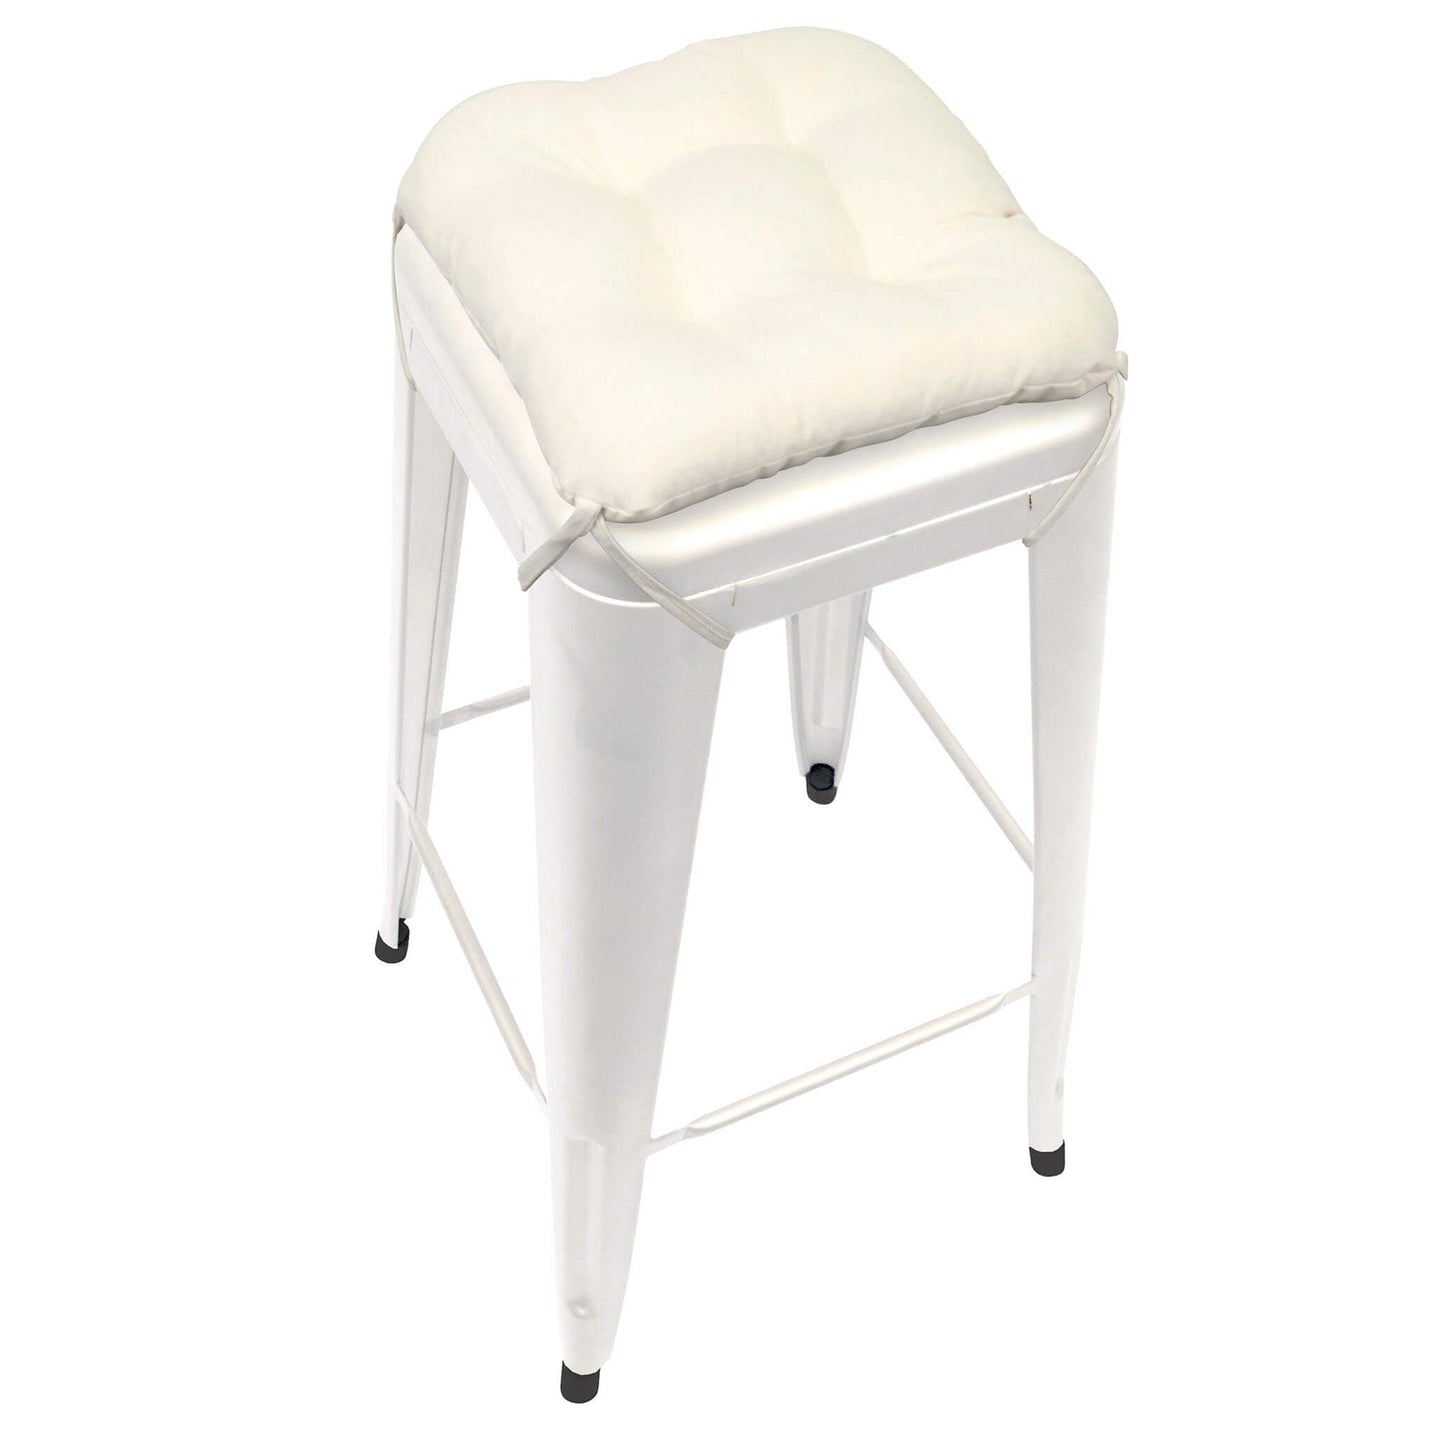 Cotton Duck Natural Square Industrial Bar Stool Cushion - Latex Foam Fill - Barnett Home Decor - Cream - White